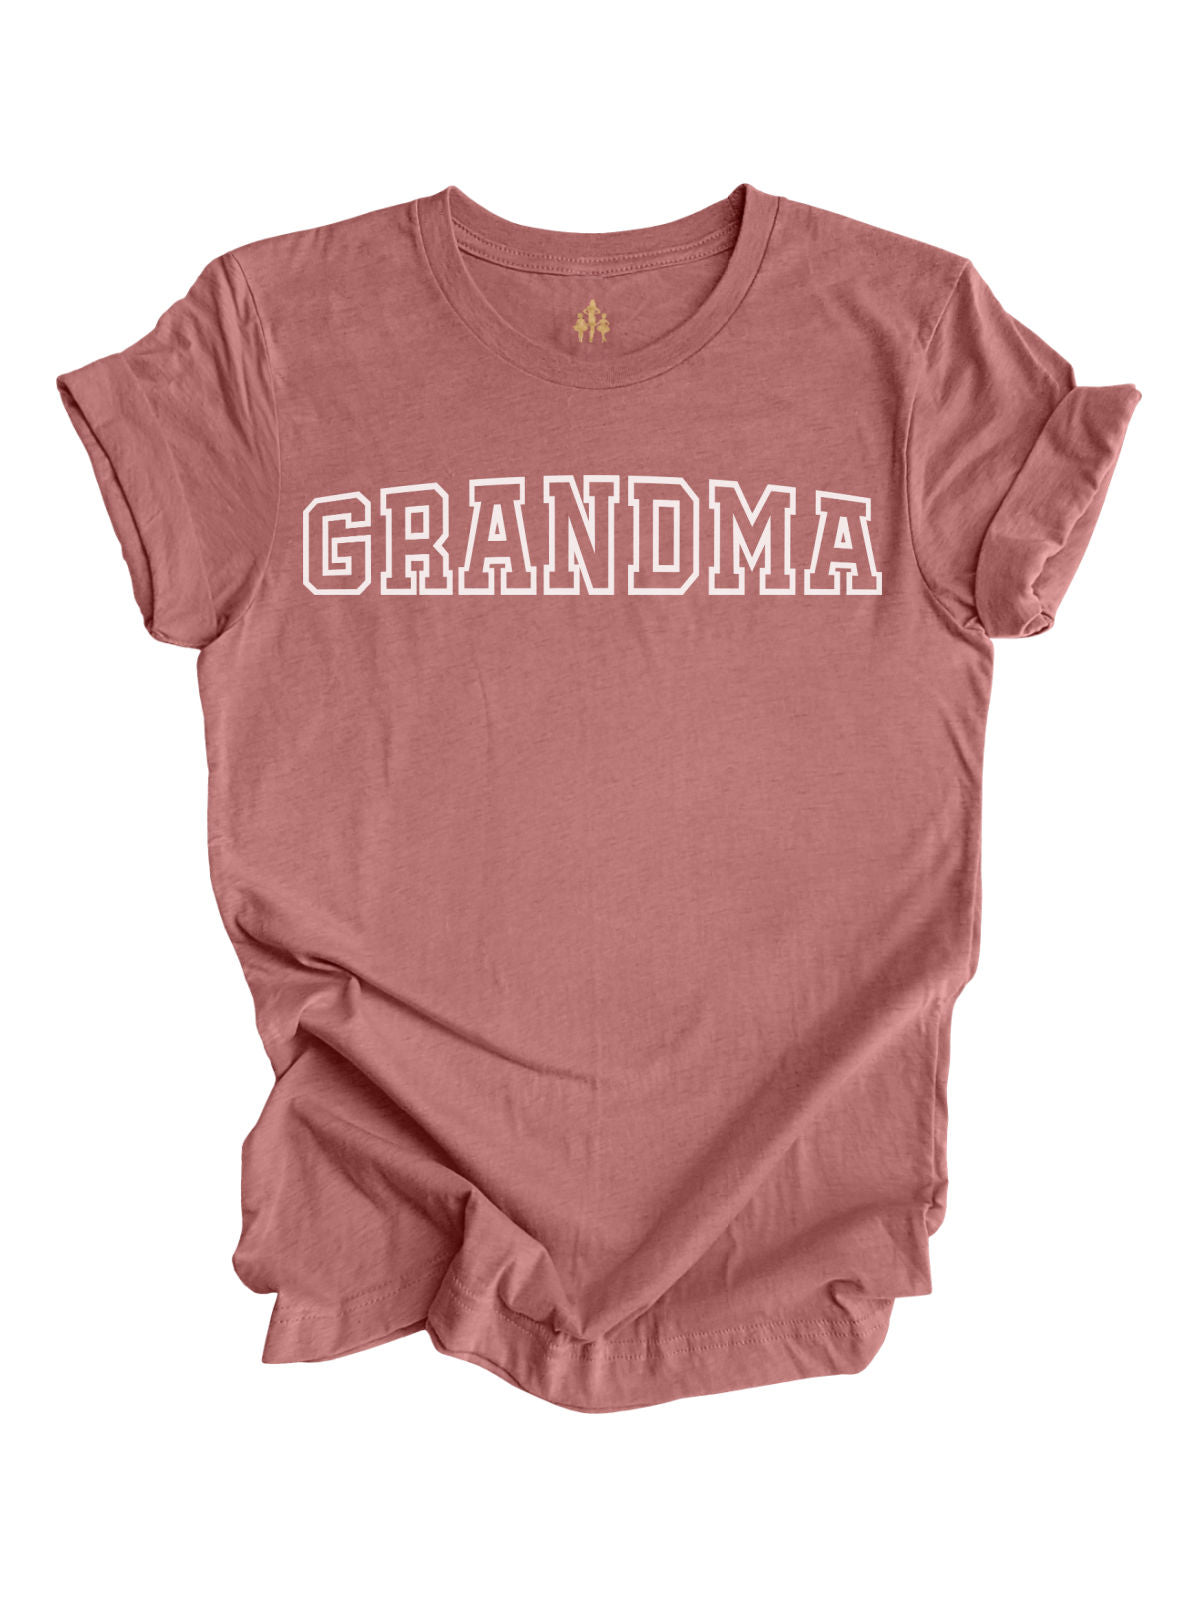 Grandma Varsity Shirt in Heather Mauve